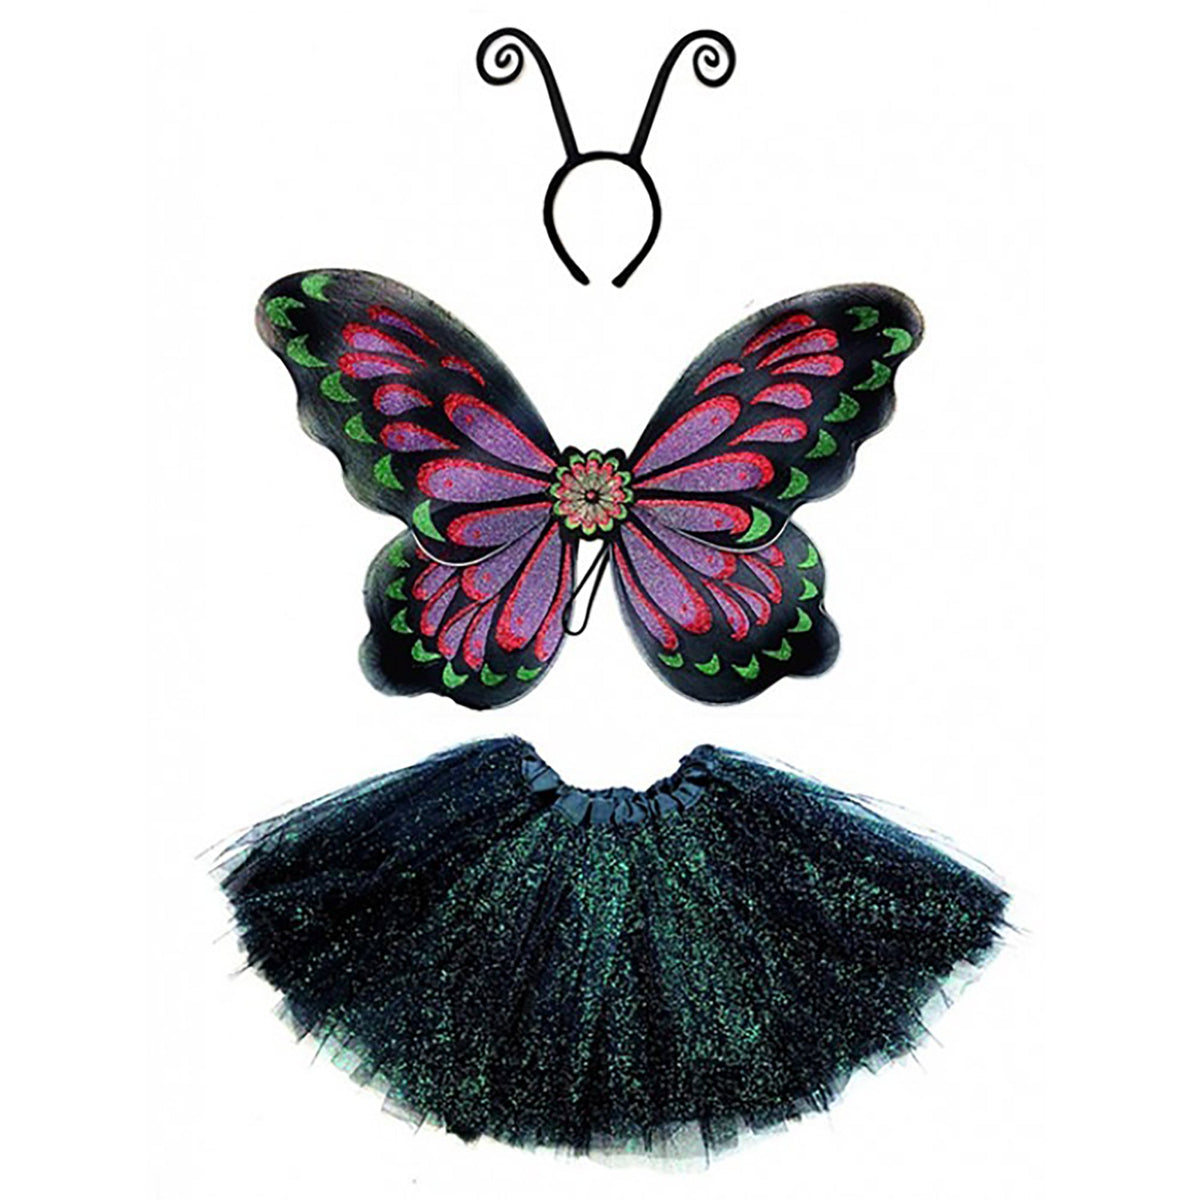 IVY TRADING INC. Costume Accessories Black Fairy Costume Kit for Kids, Black Tutu 8336572210082